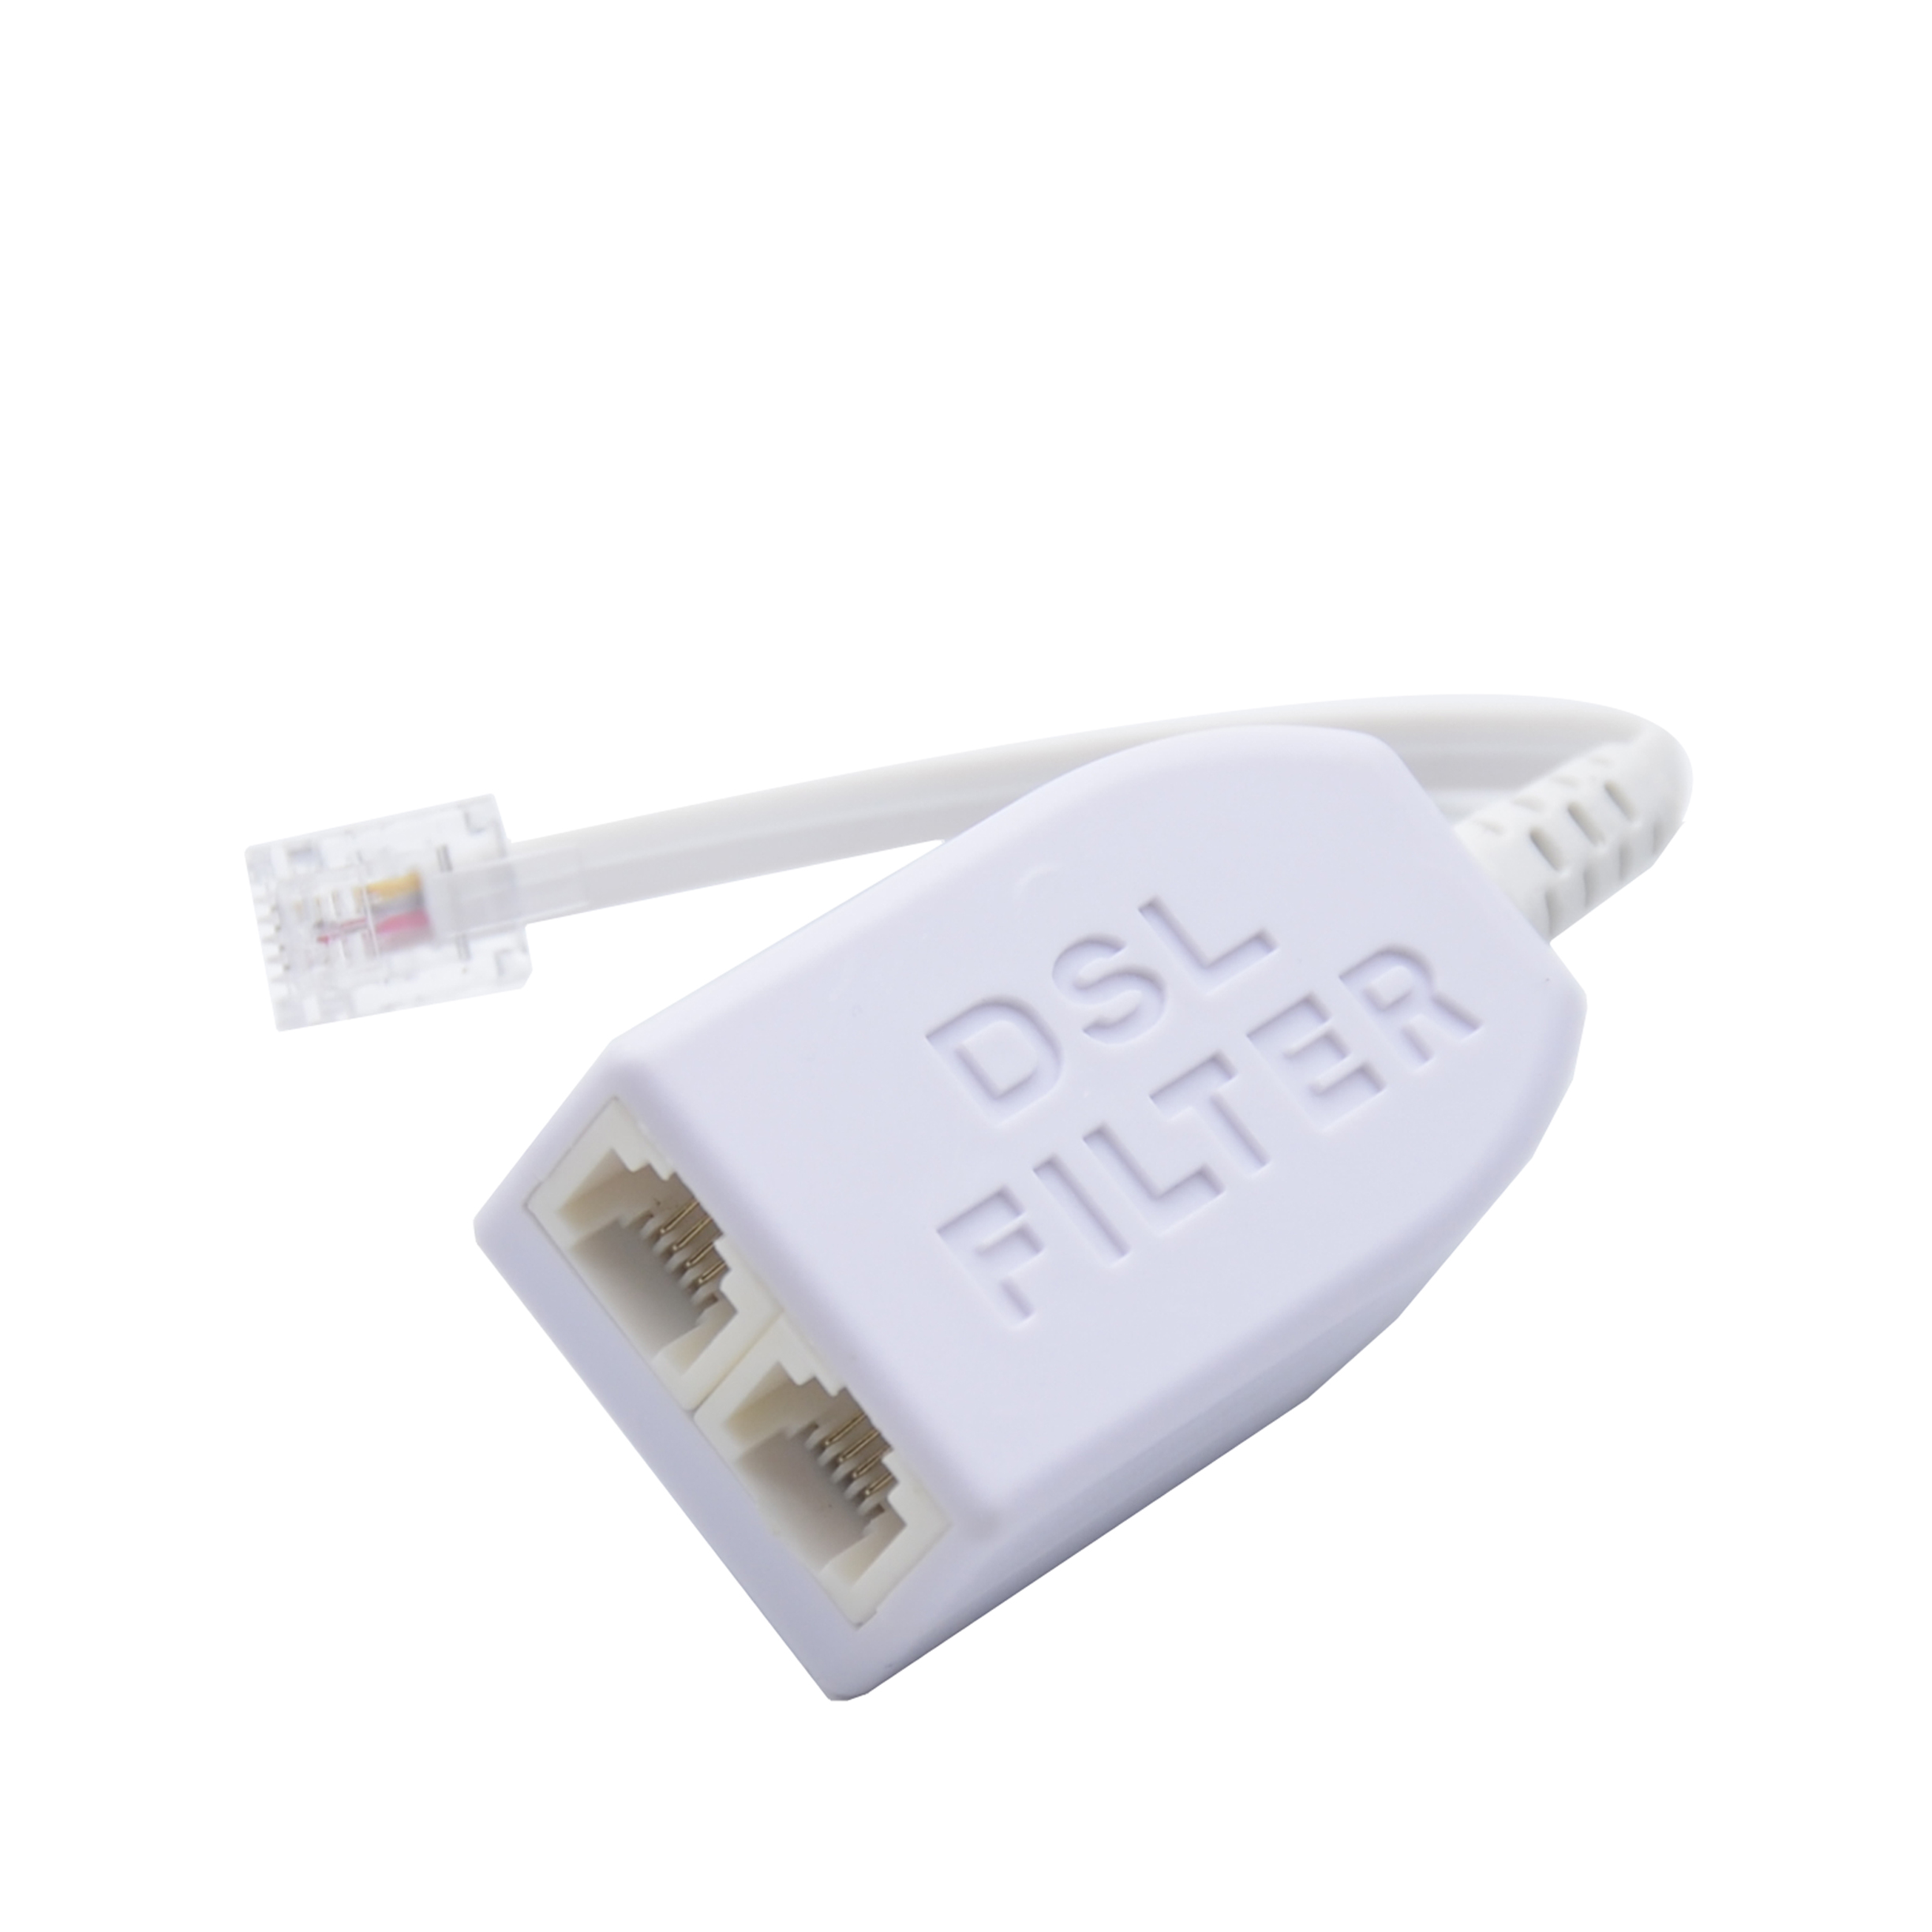 MT-5704 Wholesale 4 Pin Splitter ADSL Modem Double Micro Filter